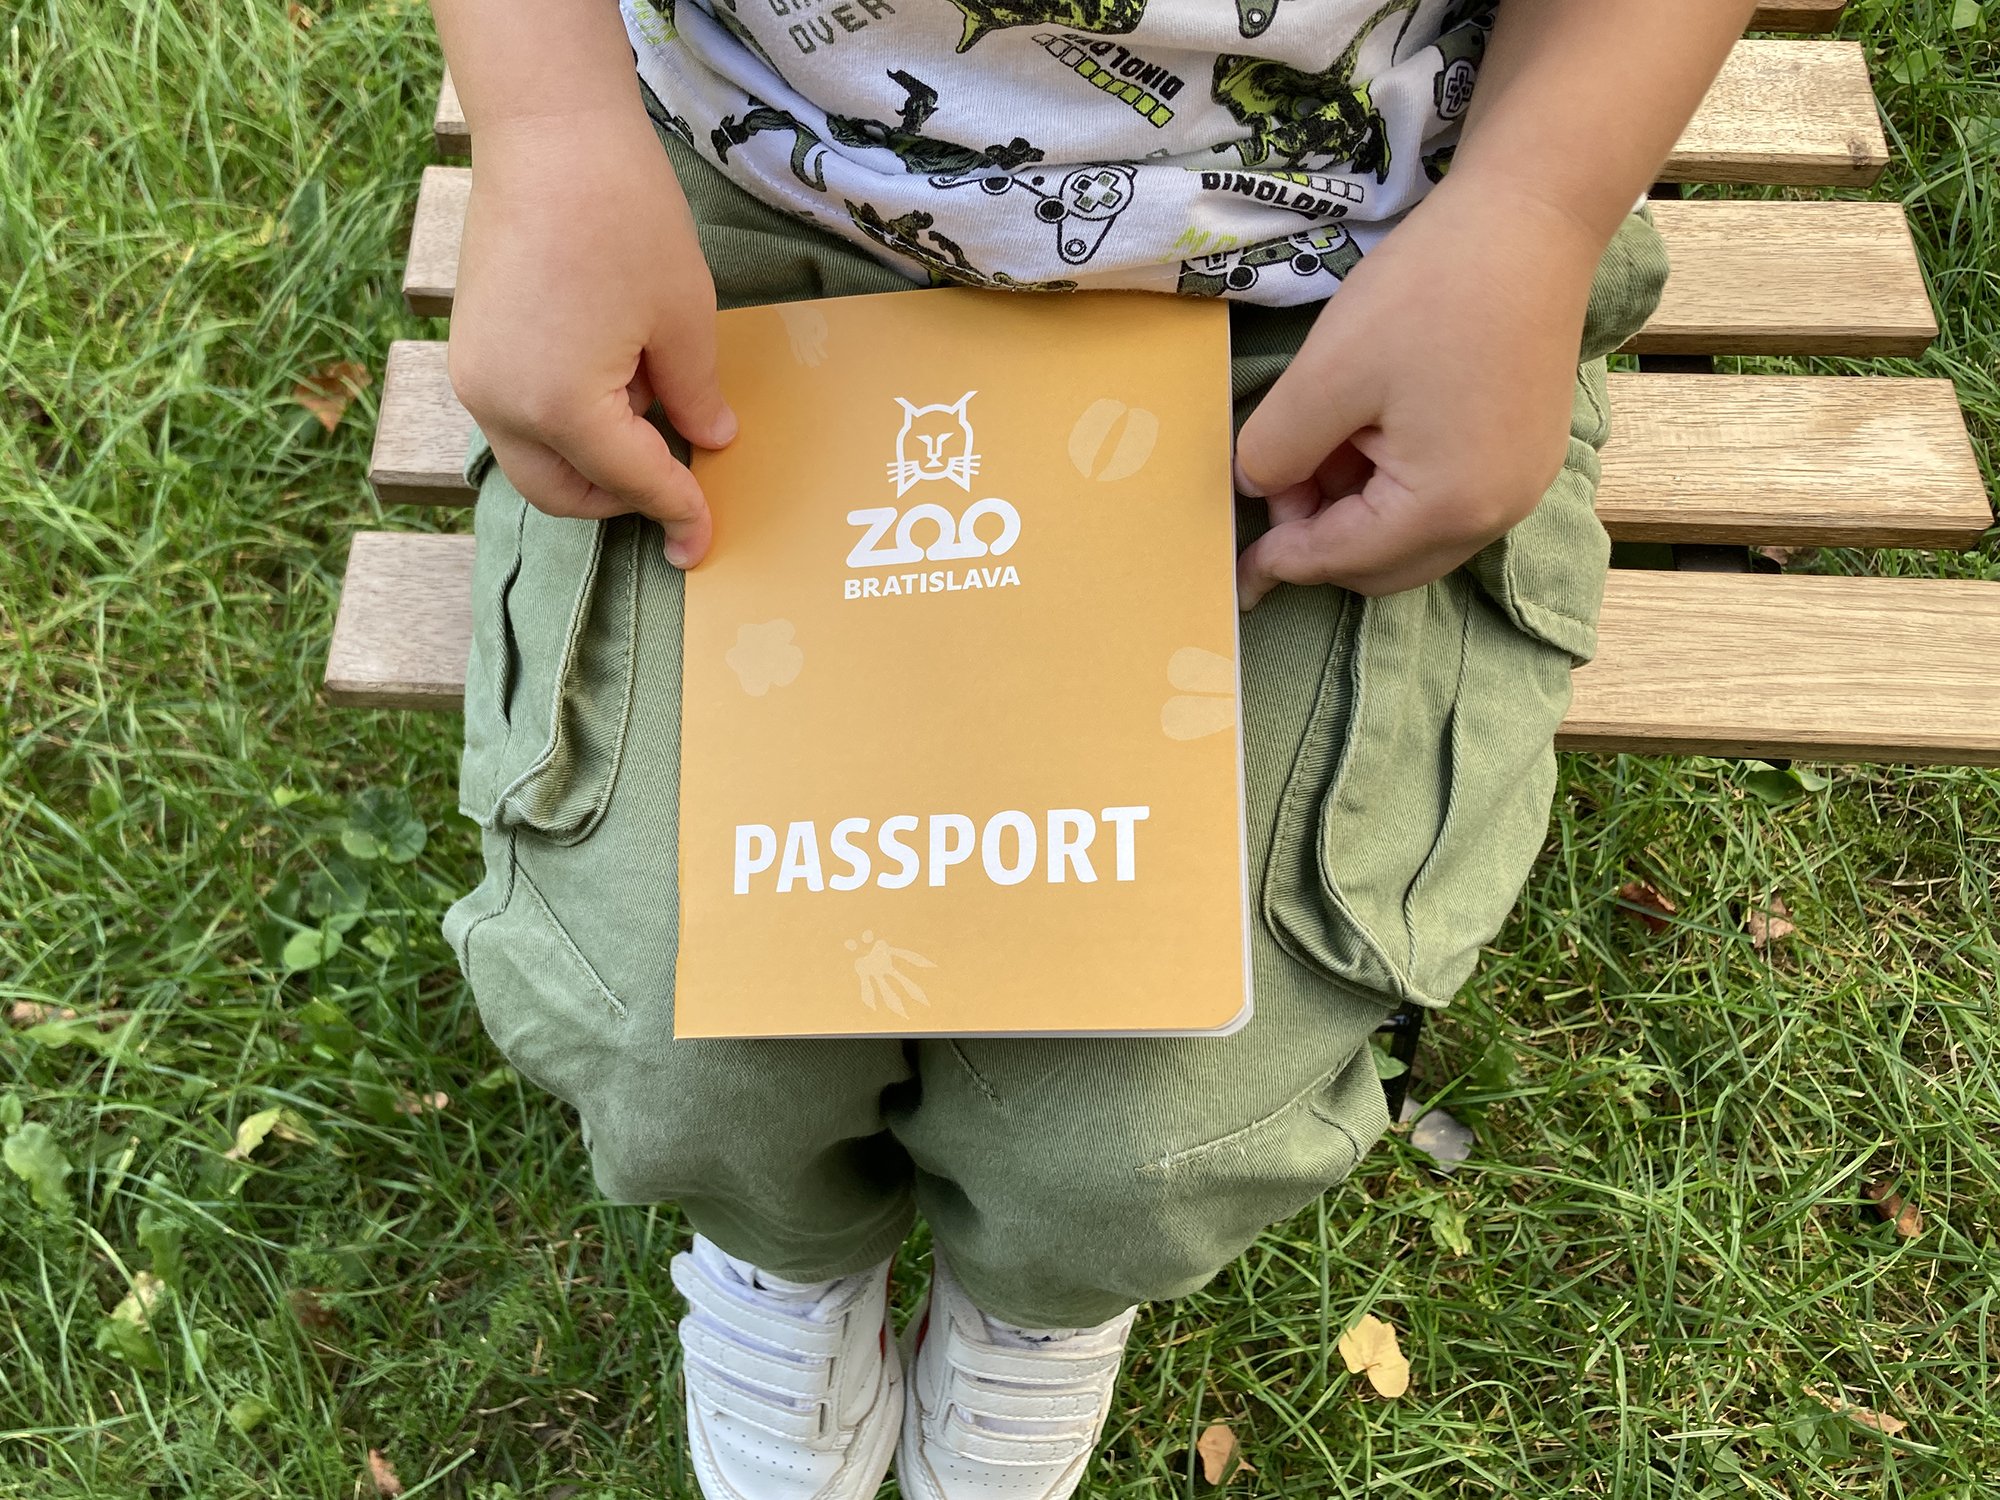 Passport for Zoo Bratislava